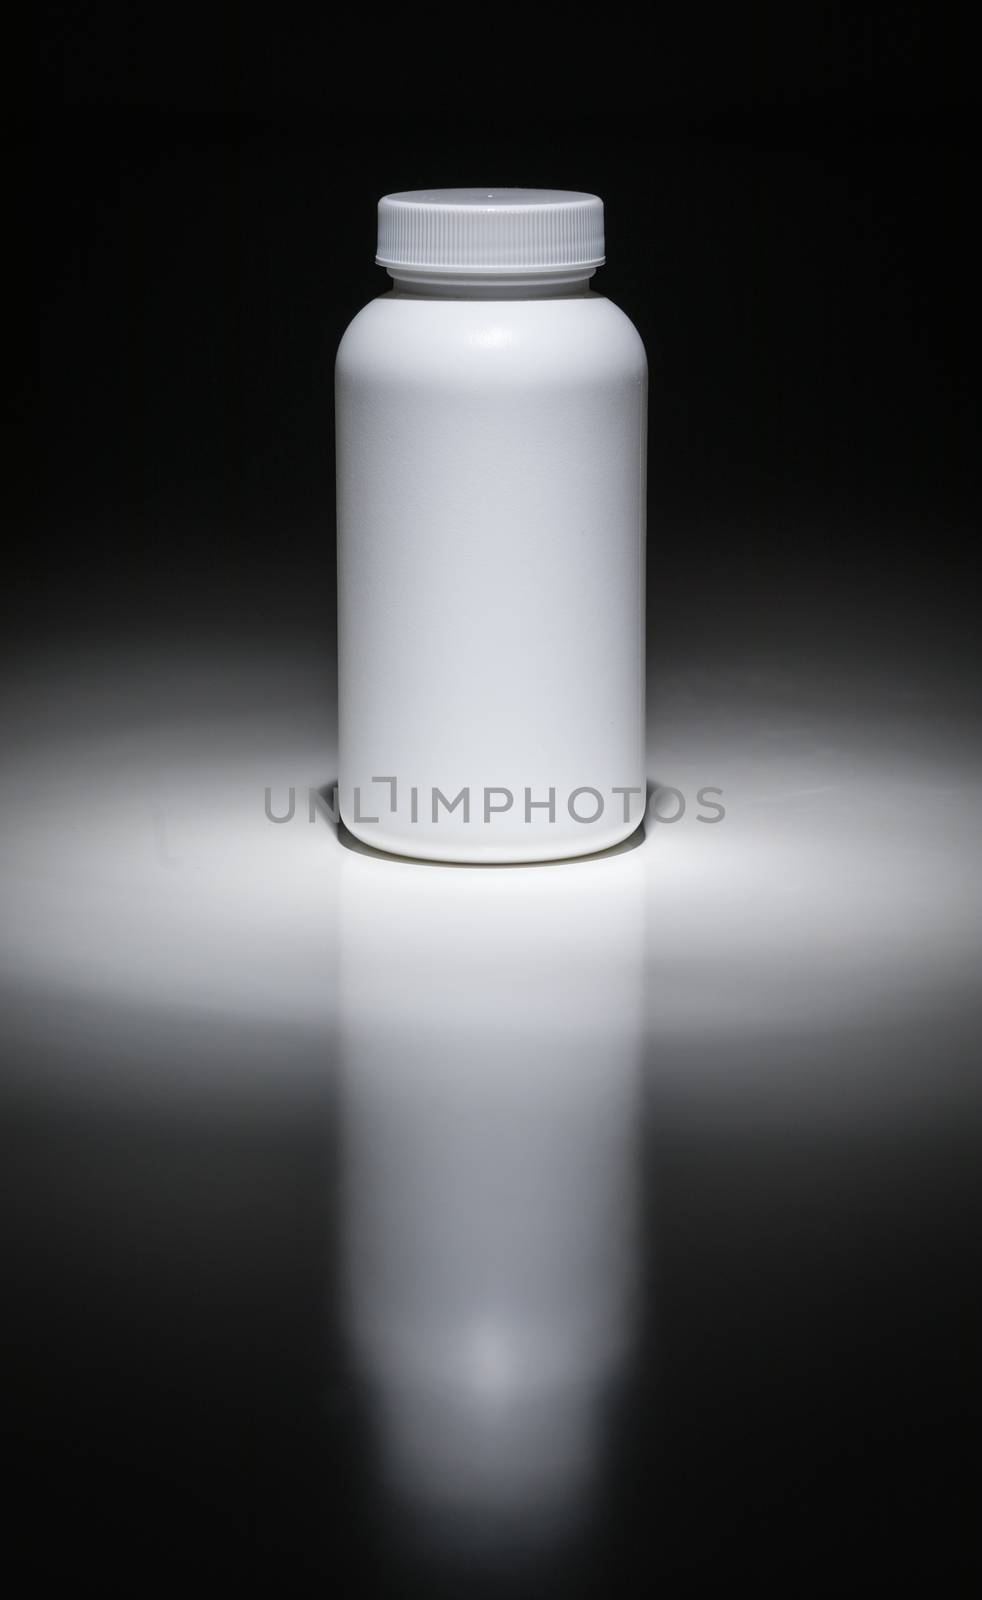 Blank White Bottle Ready For Your Text Under Spot Light.